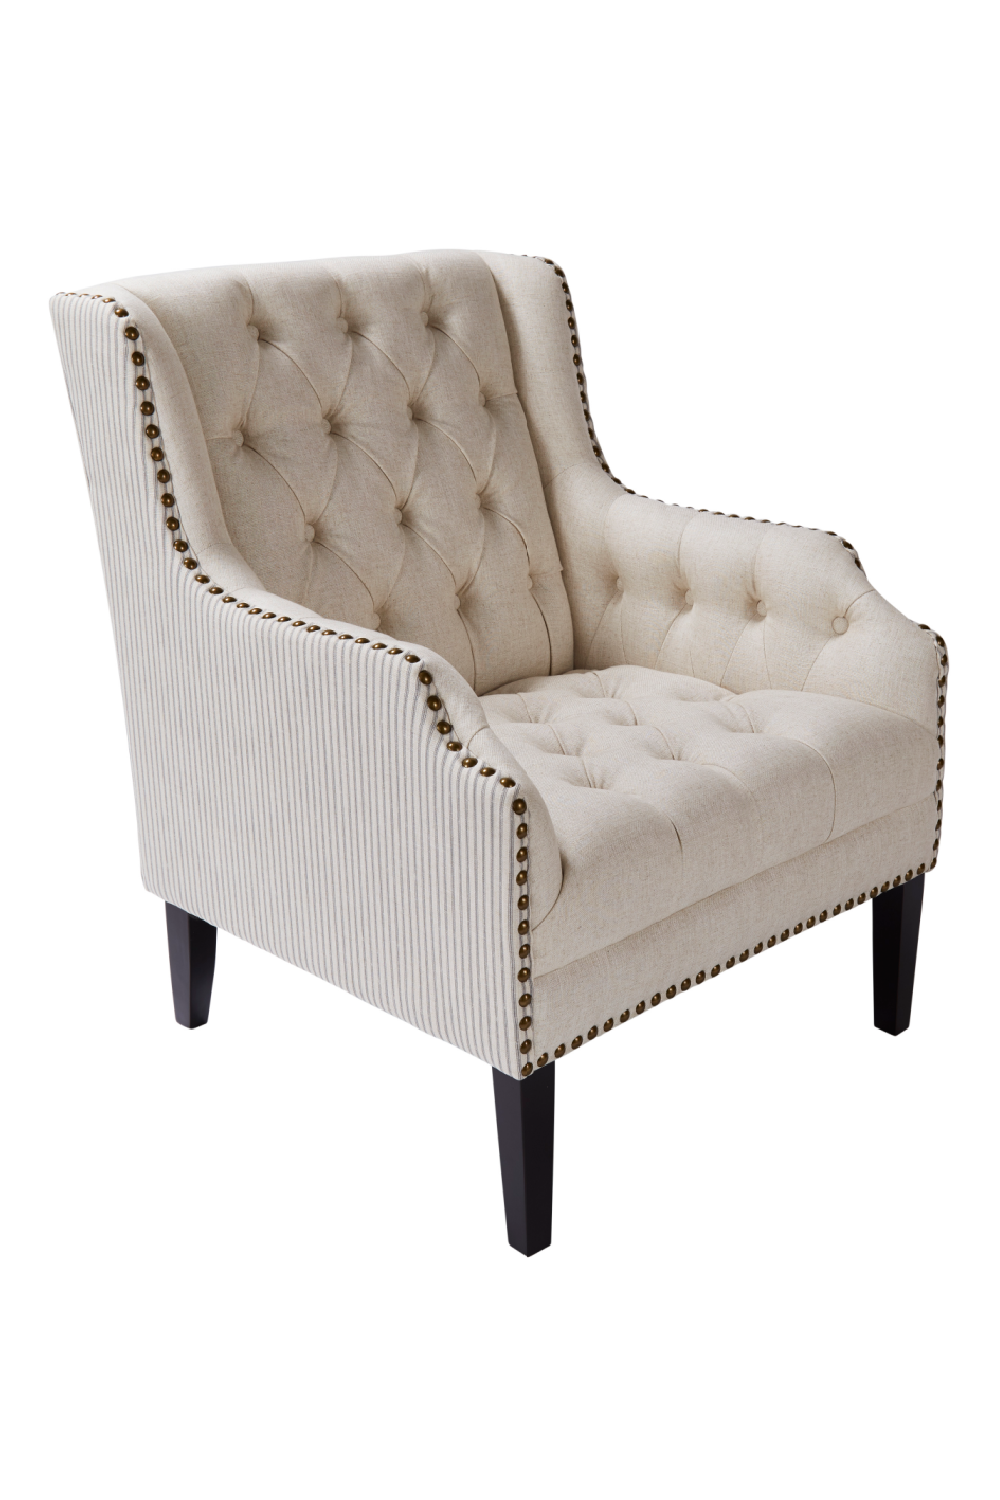 Cream Upholstered Chair with Brass Studs | Andrew Martin Bassett